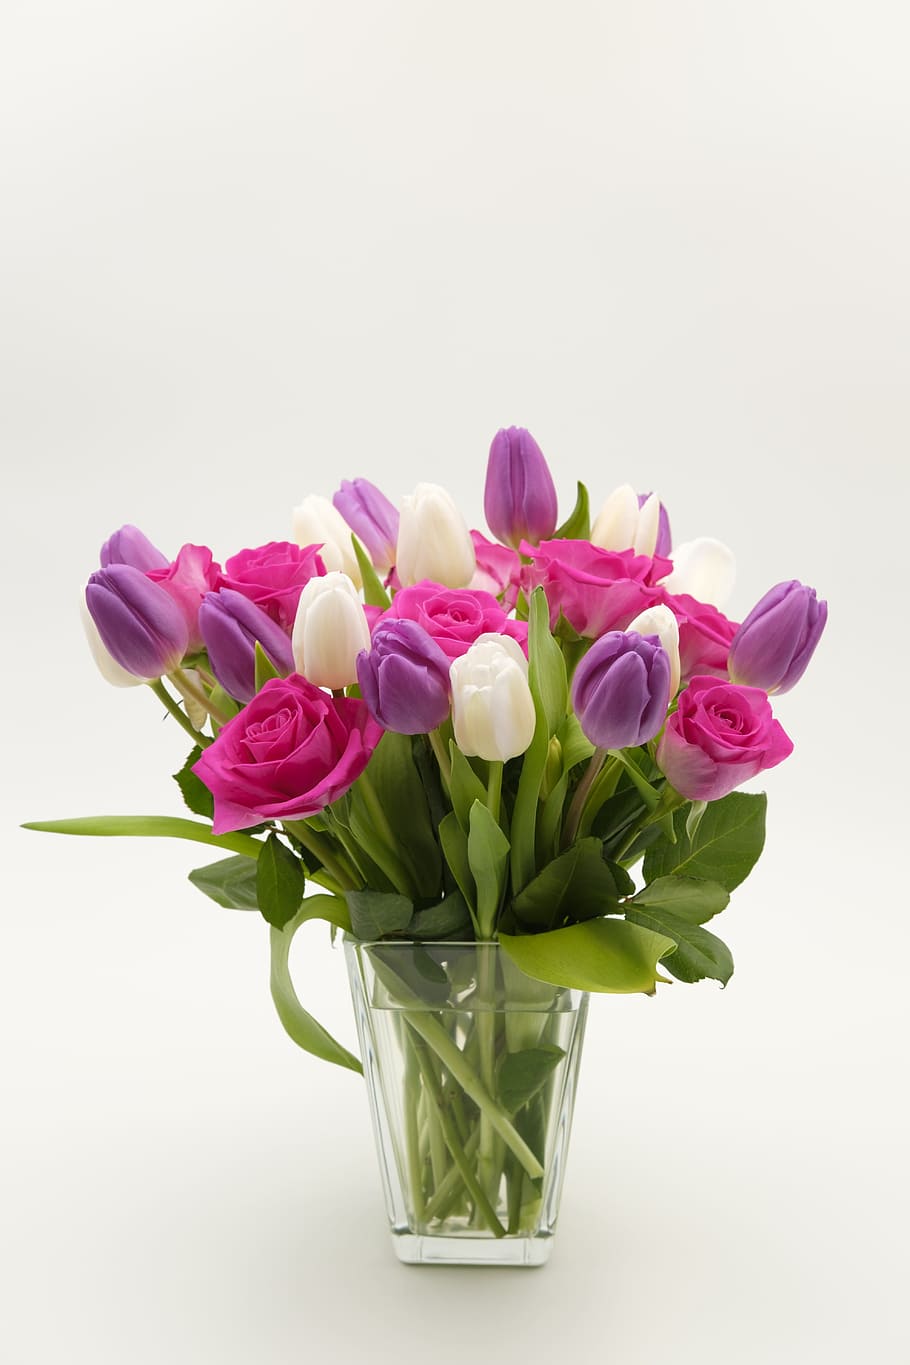 rosa, púrpura, amplio, arreglo floral petalo, ramo, ramo de rosas, ramo de tulipán, rosas, tulipanes, flores